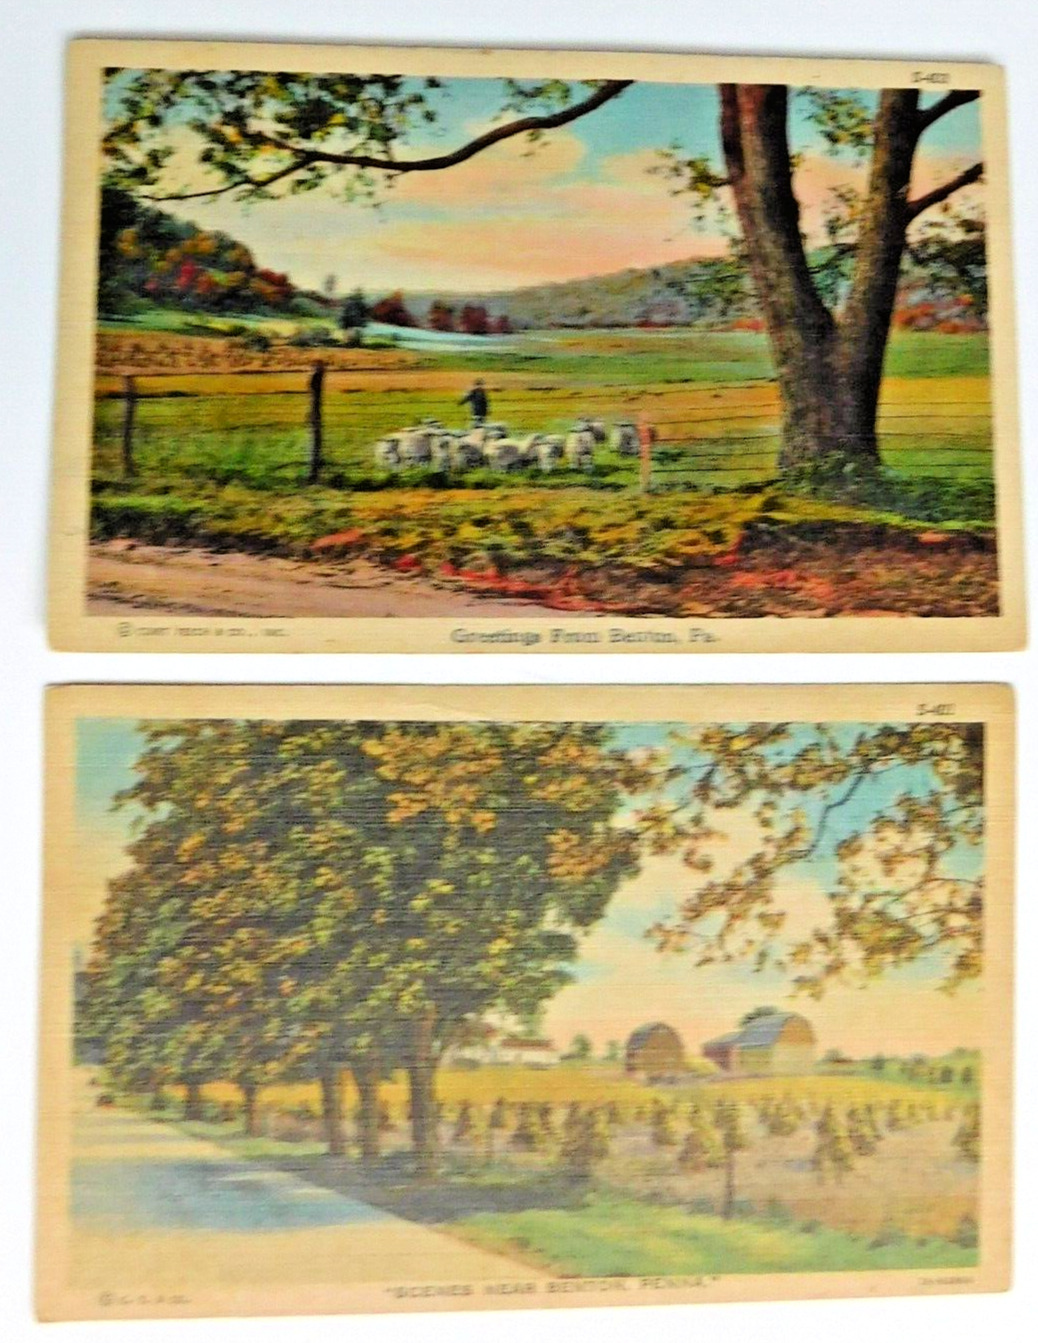 Benton Pennsylvania Scenes Lot of 2 VTG Linen Postcards Posted